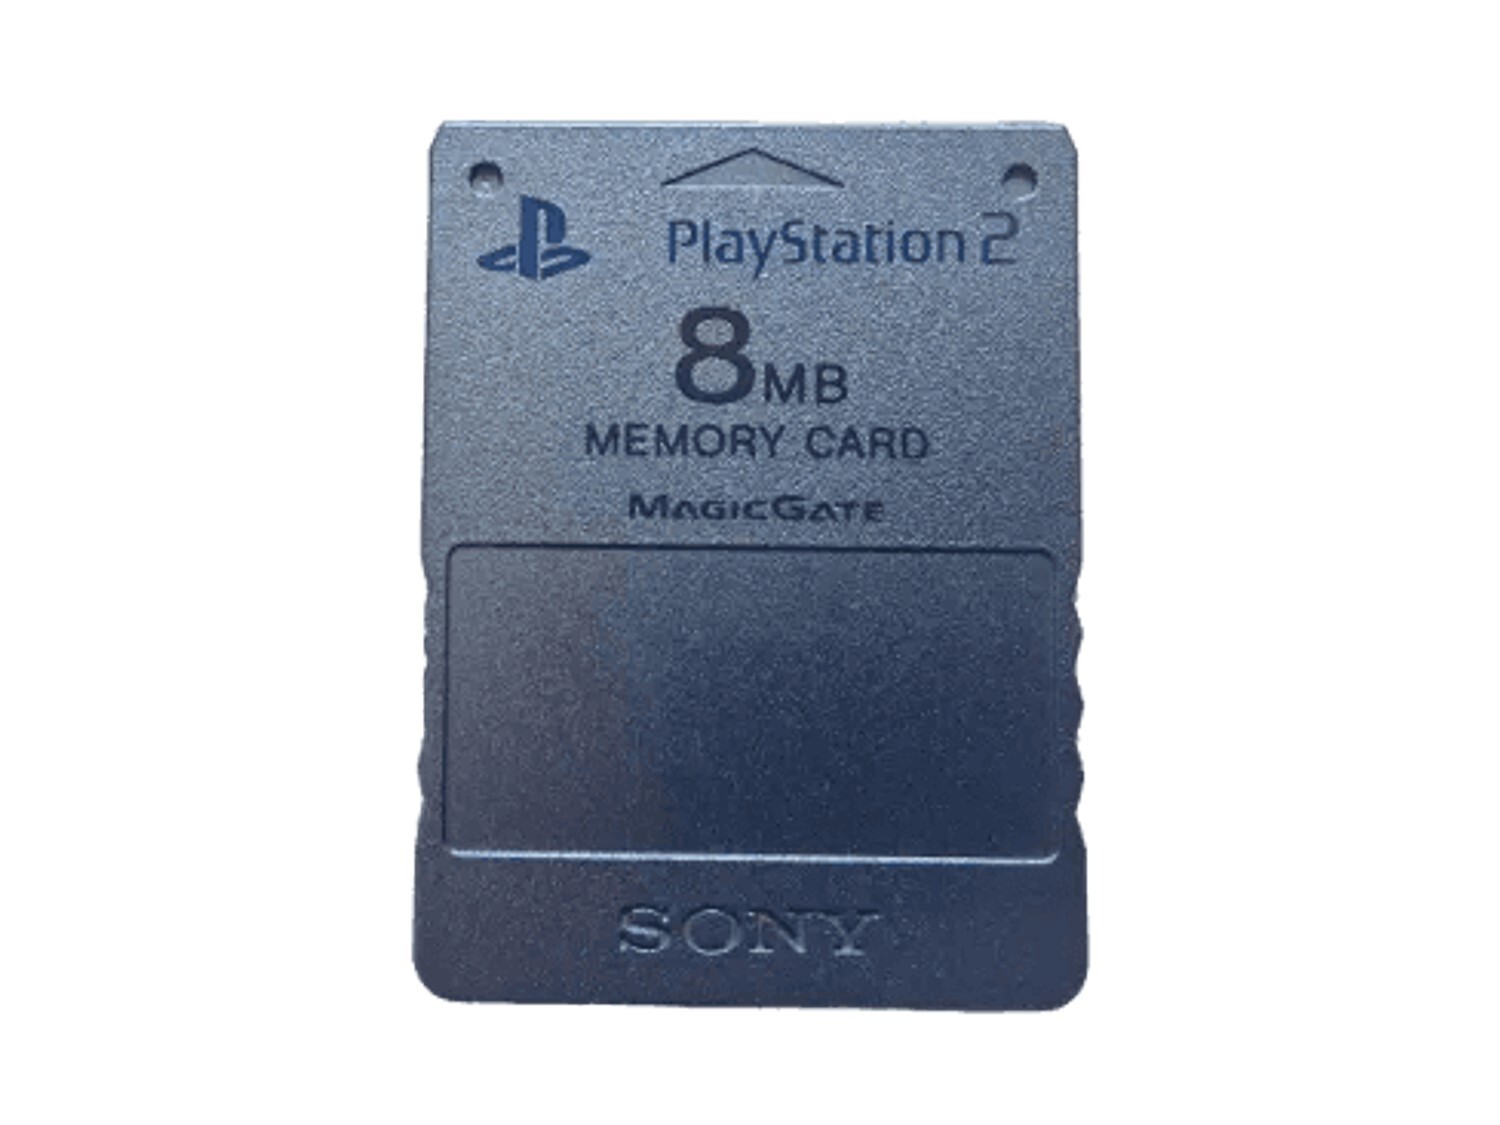 Originele PlayStation 2 Memory Card - Aqua Bue (8MB) - Playstation 2 Hardware